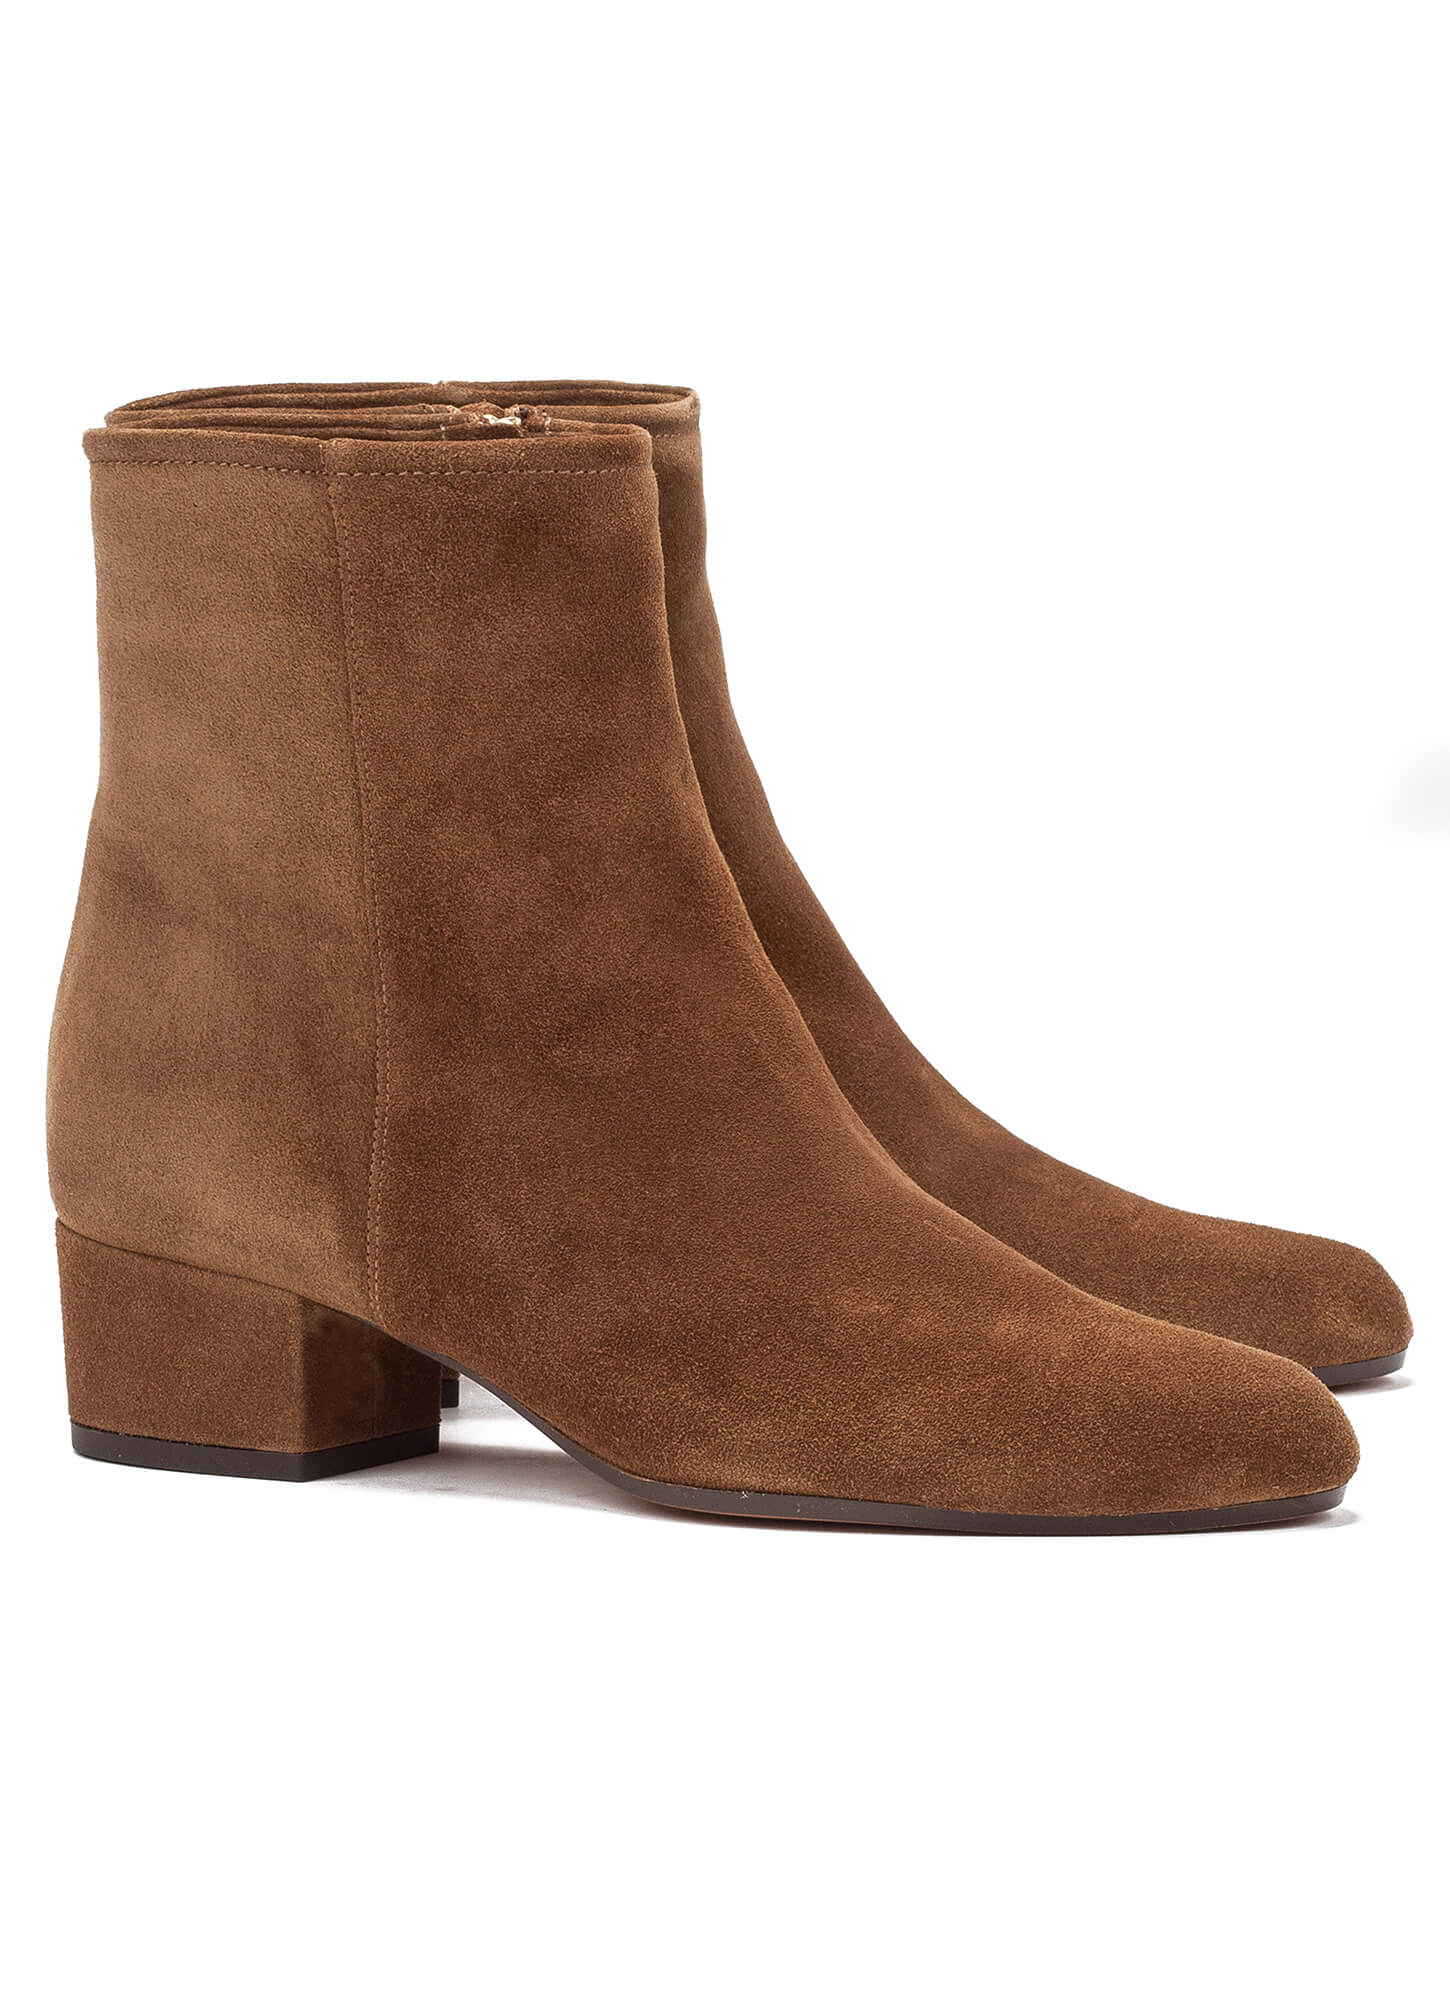 Low heel ankle boot in brown suede - online shoe store Pura Lopez